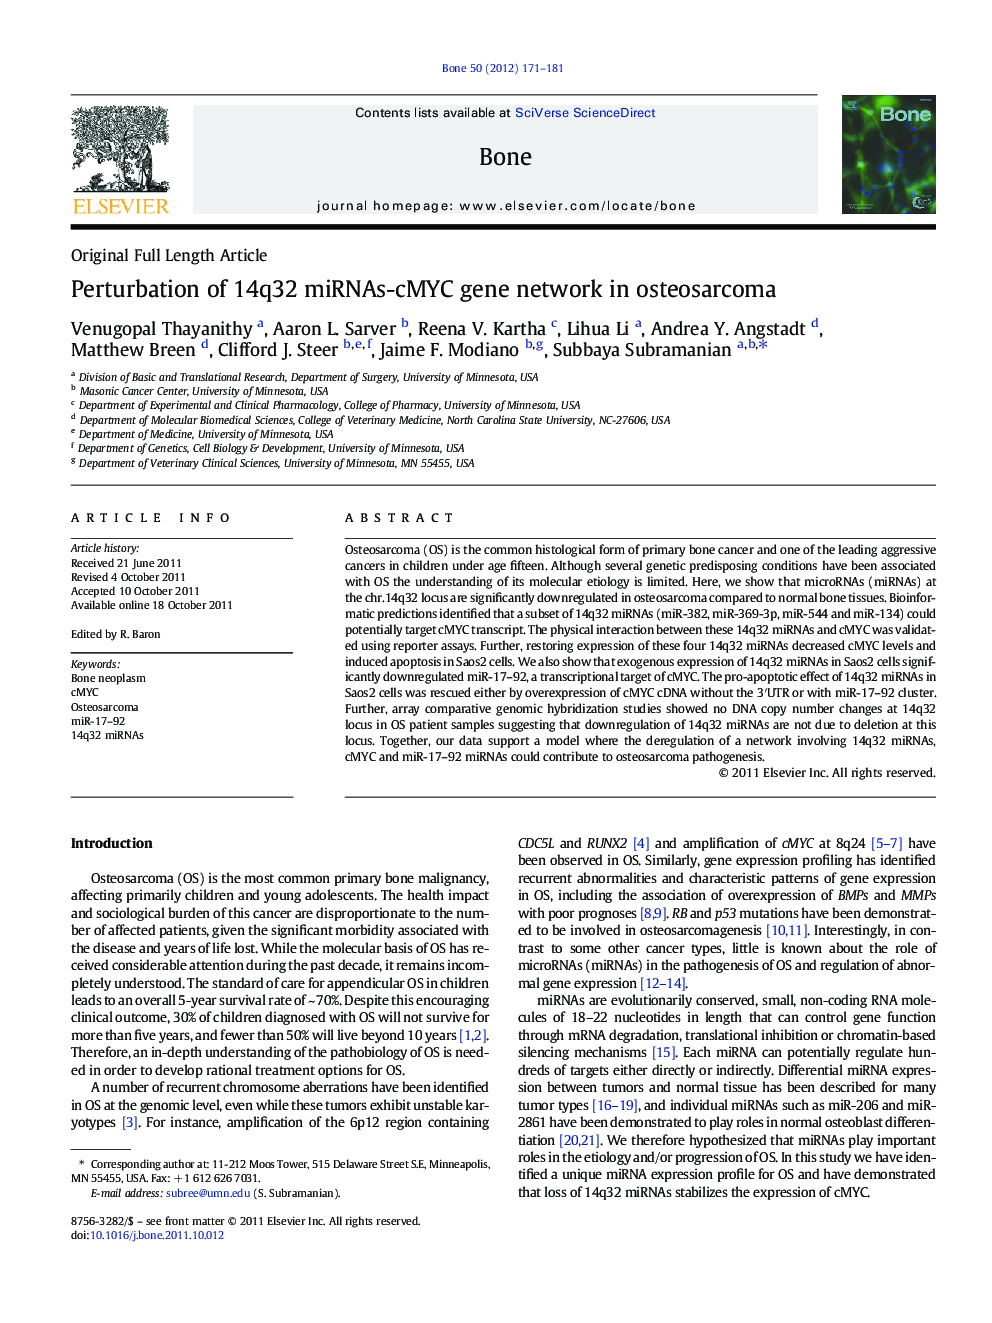 Original Full Length ArticlePerturbation of 14q32 miRNAs-cMYC gene network in osteosarcoma